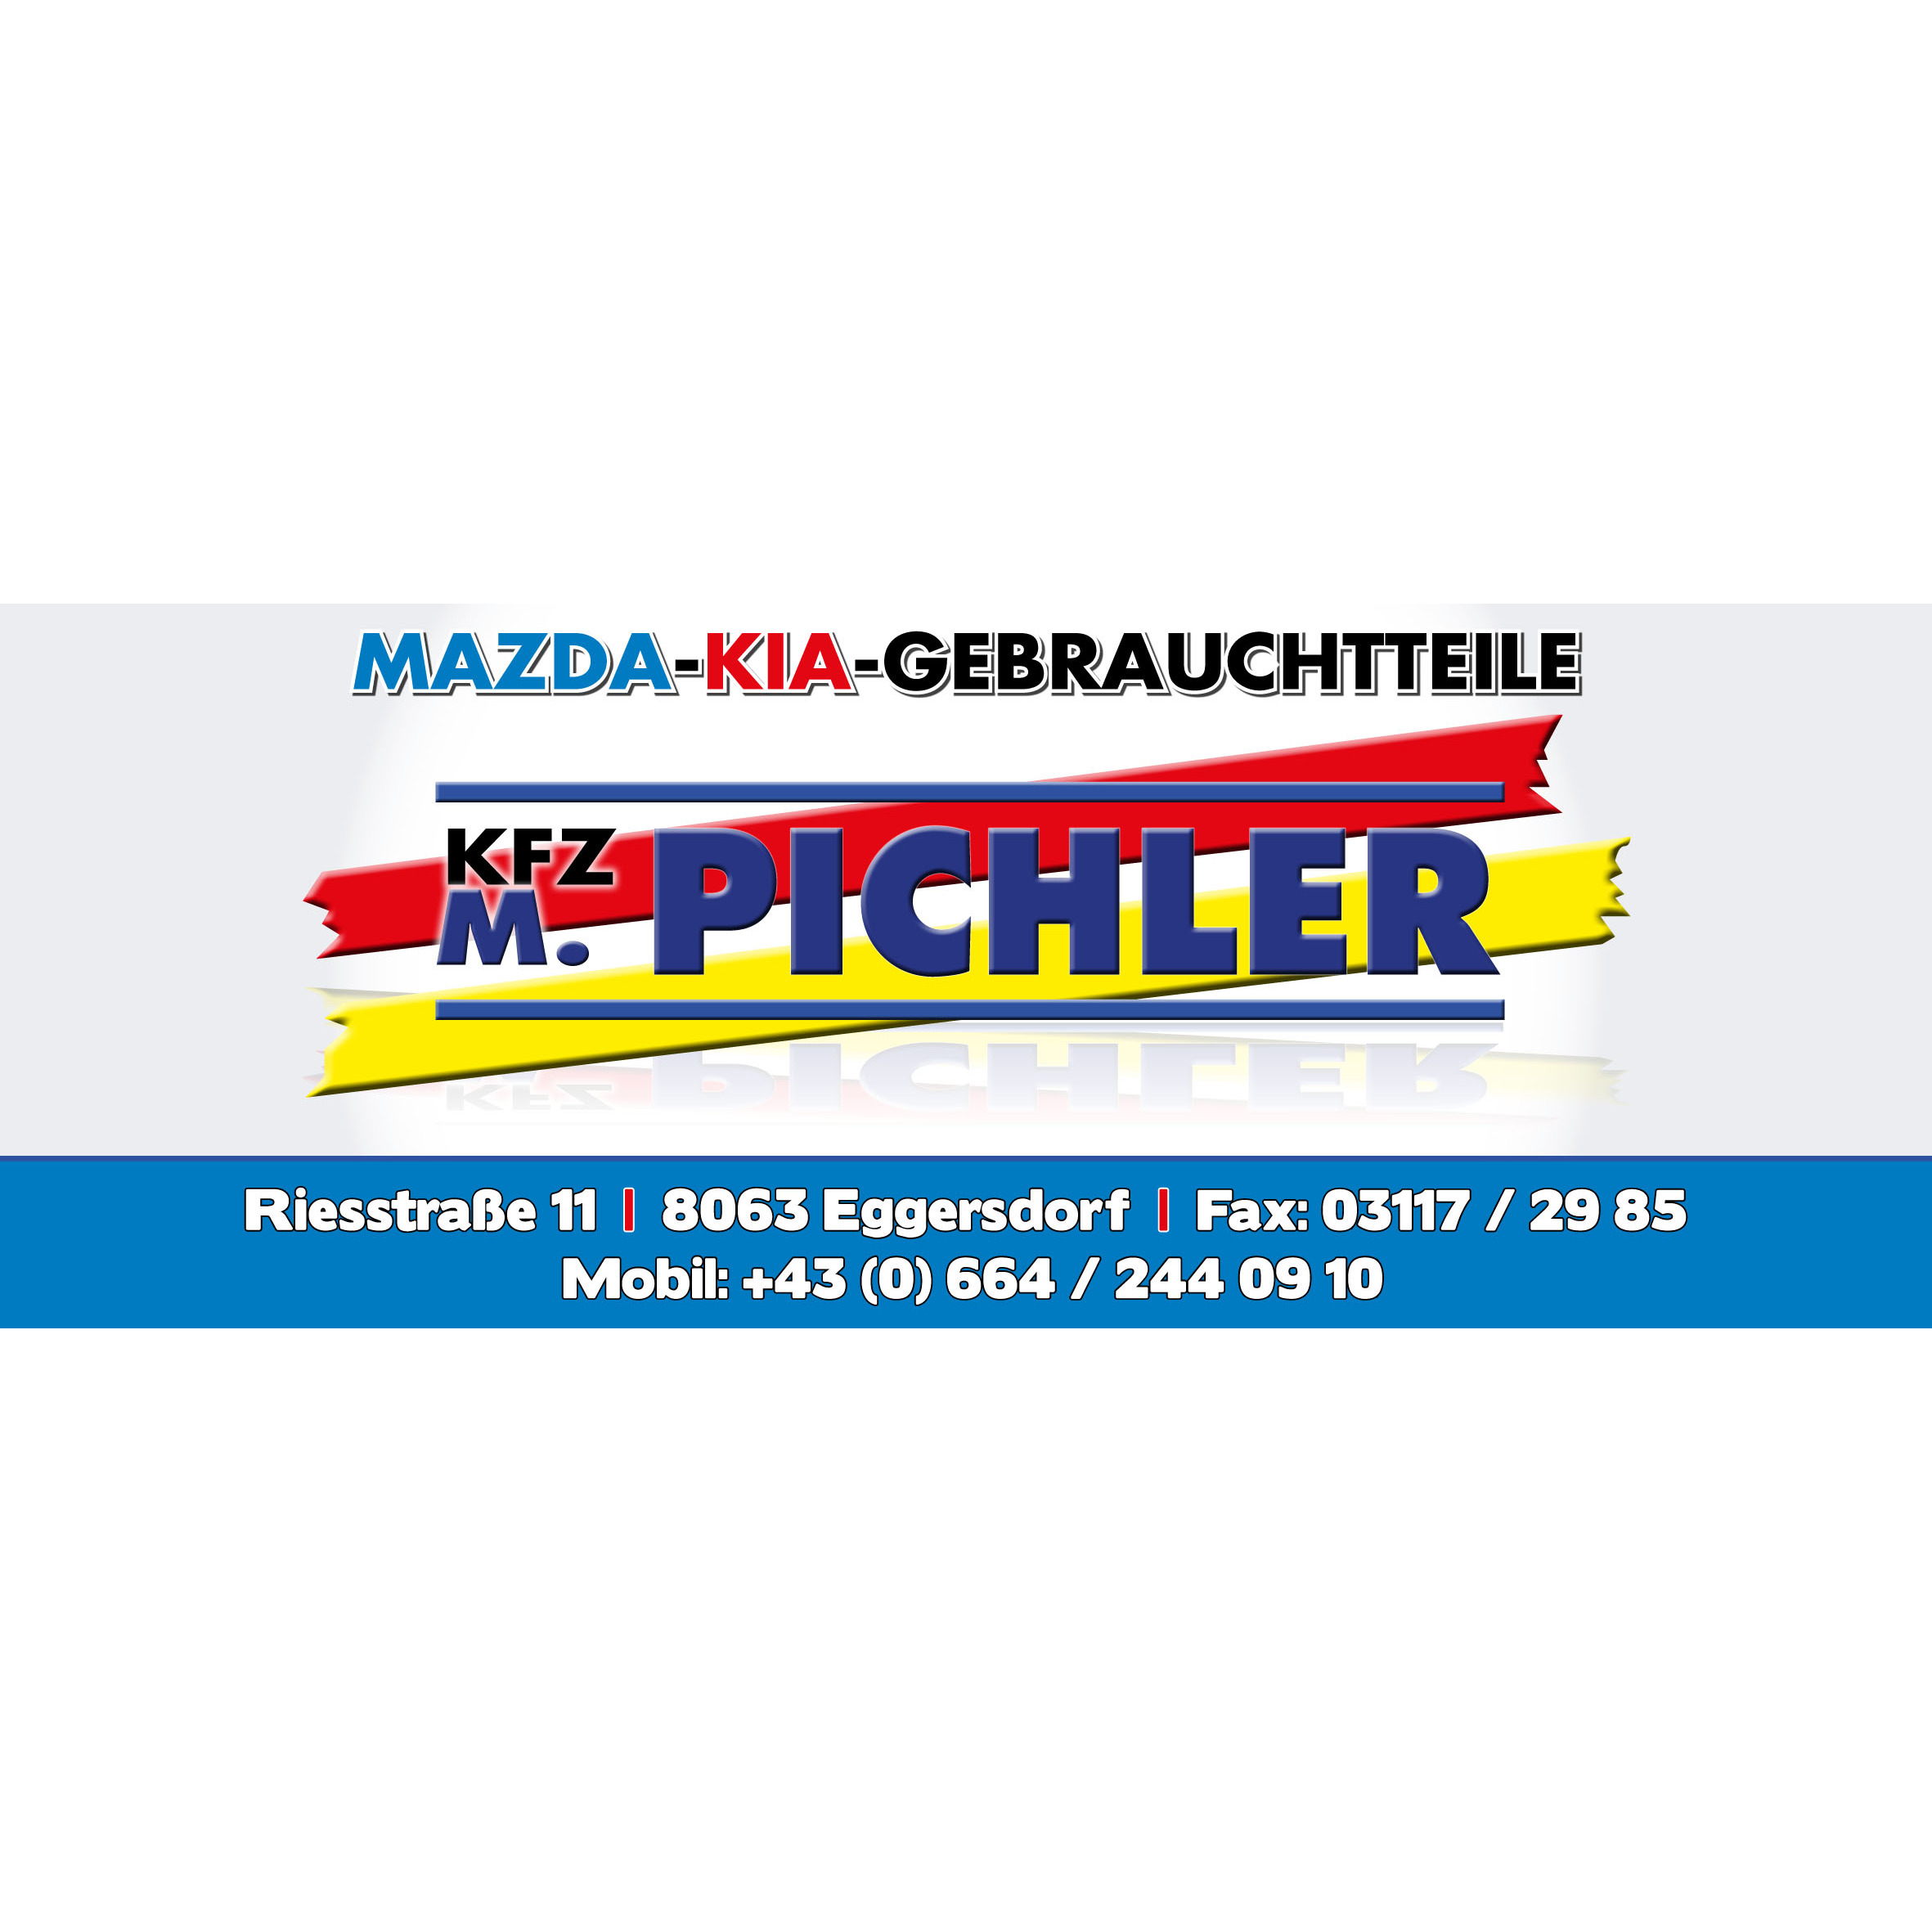 KFZ M. Pichler MAZDA & KIA Gebrauchtteile Logo